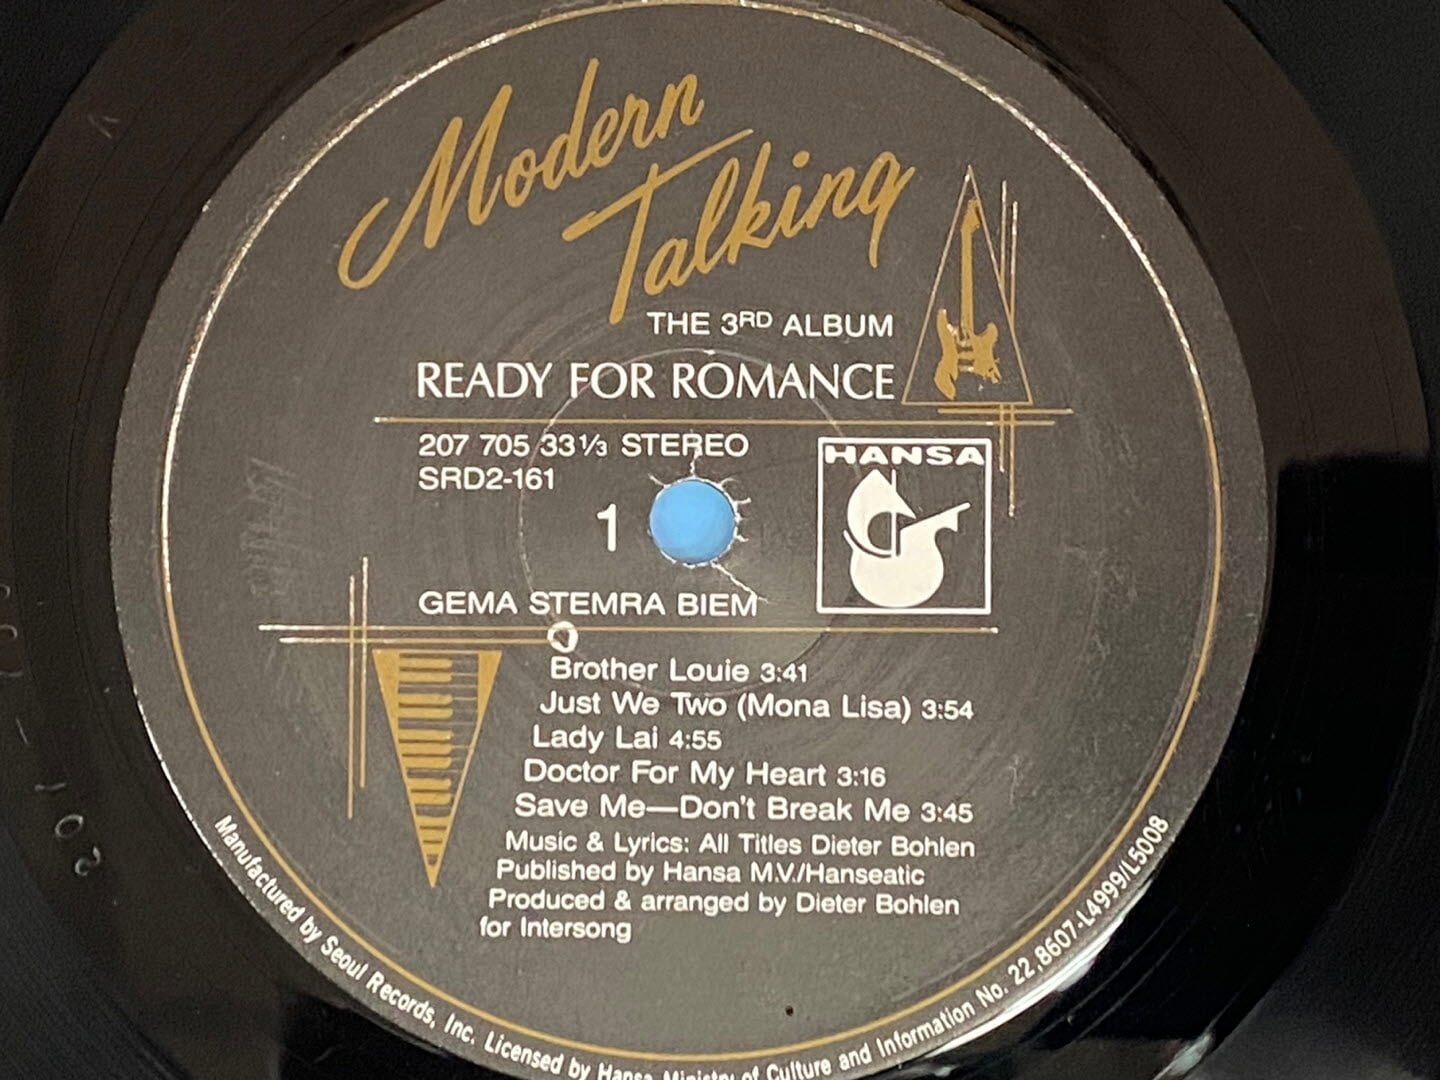 [LP] 모던 도킹 - Modern Talking - Ready For Romance LP [서울-라이센스반]